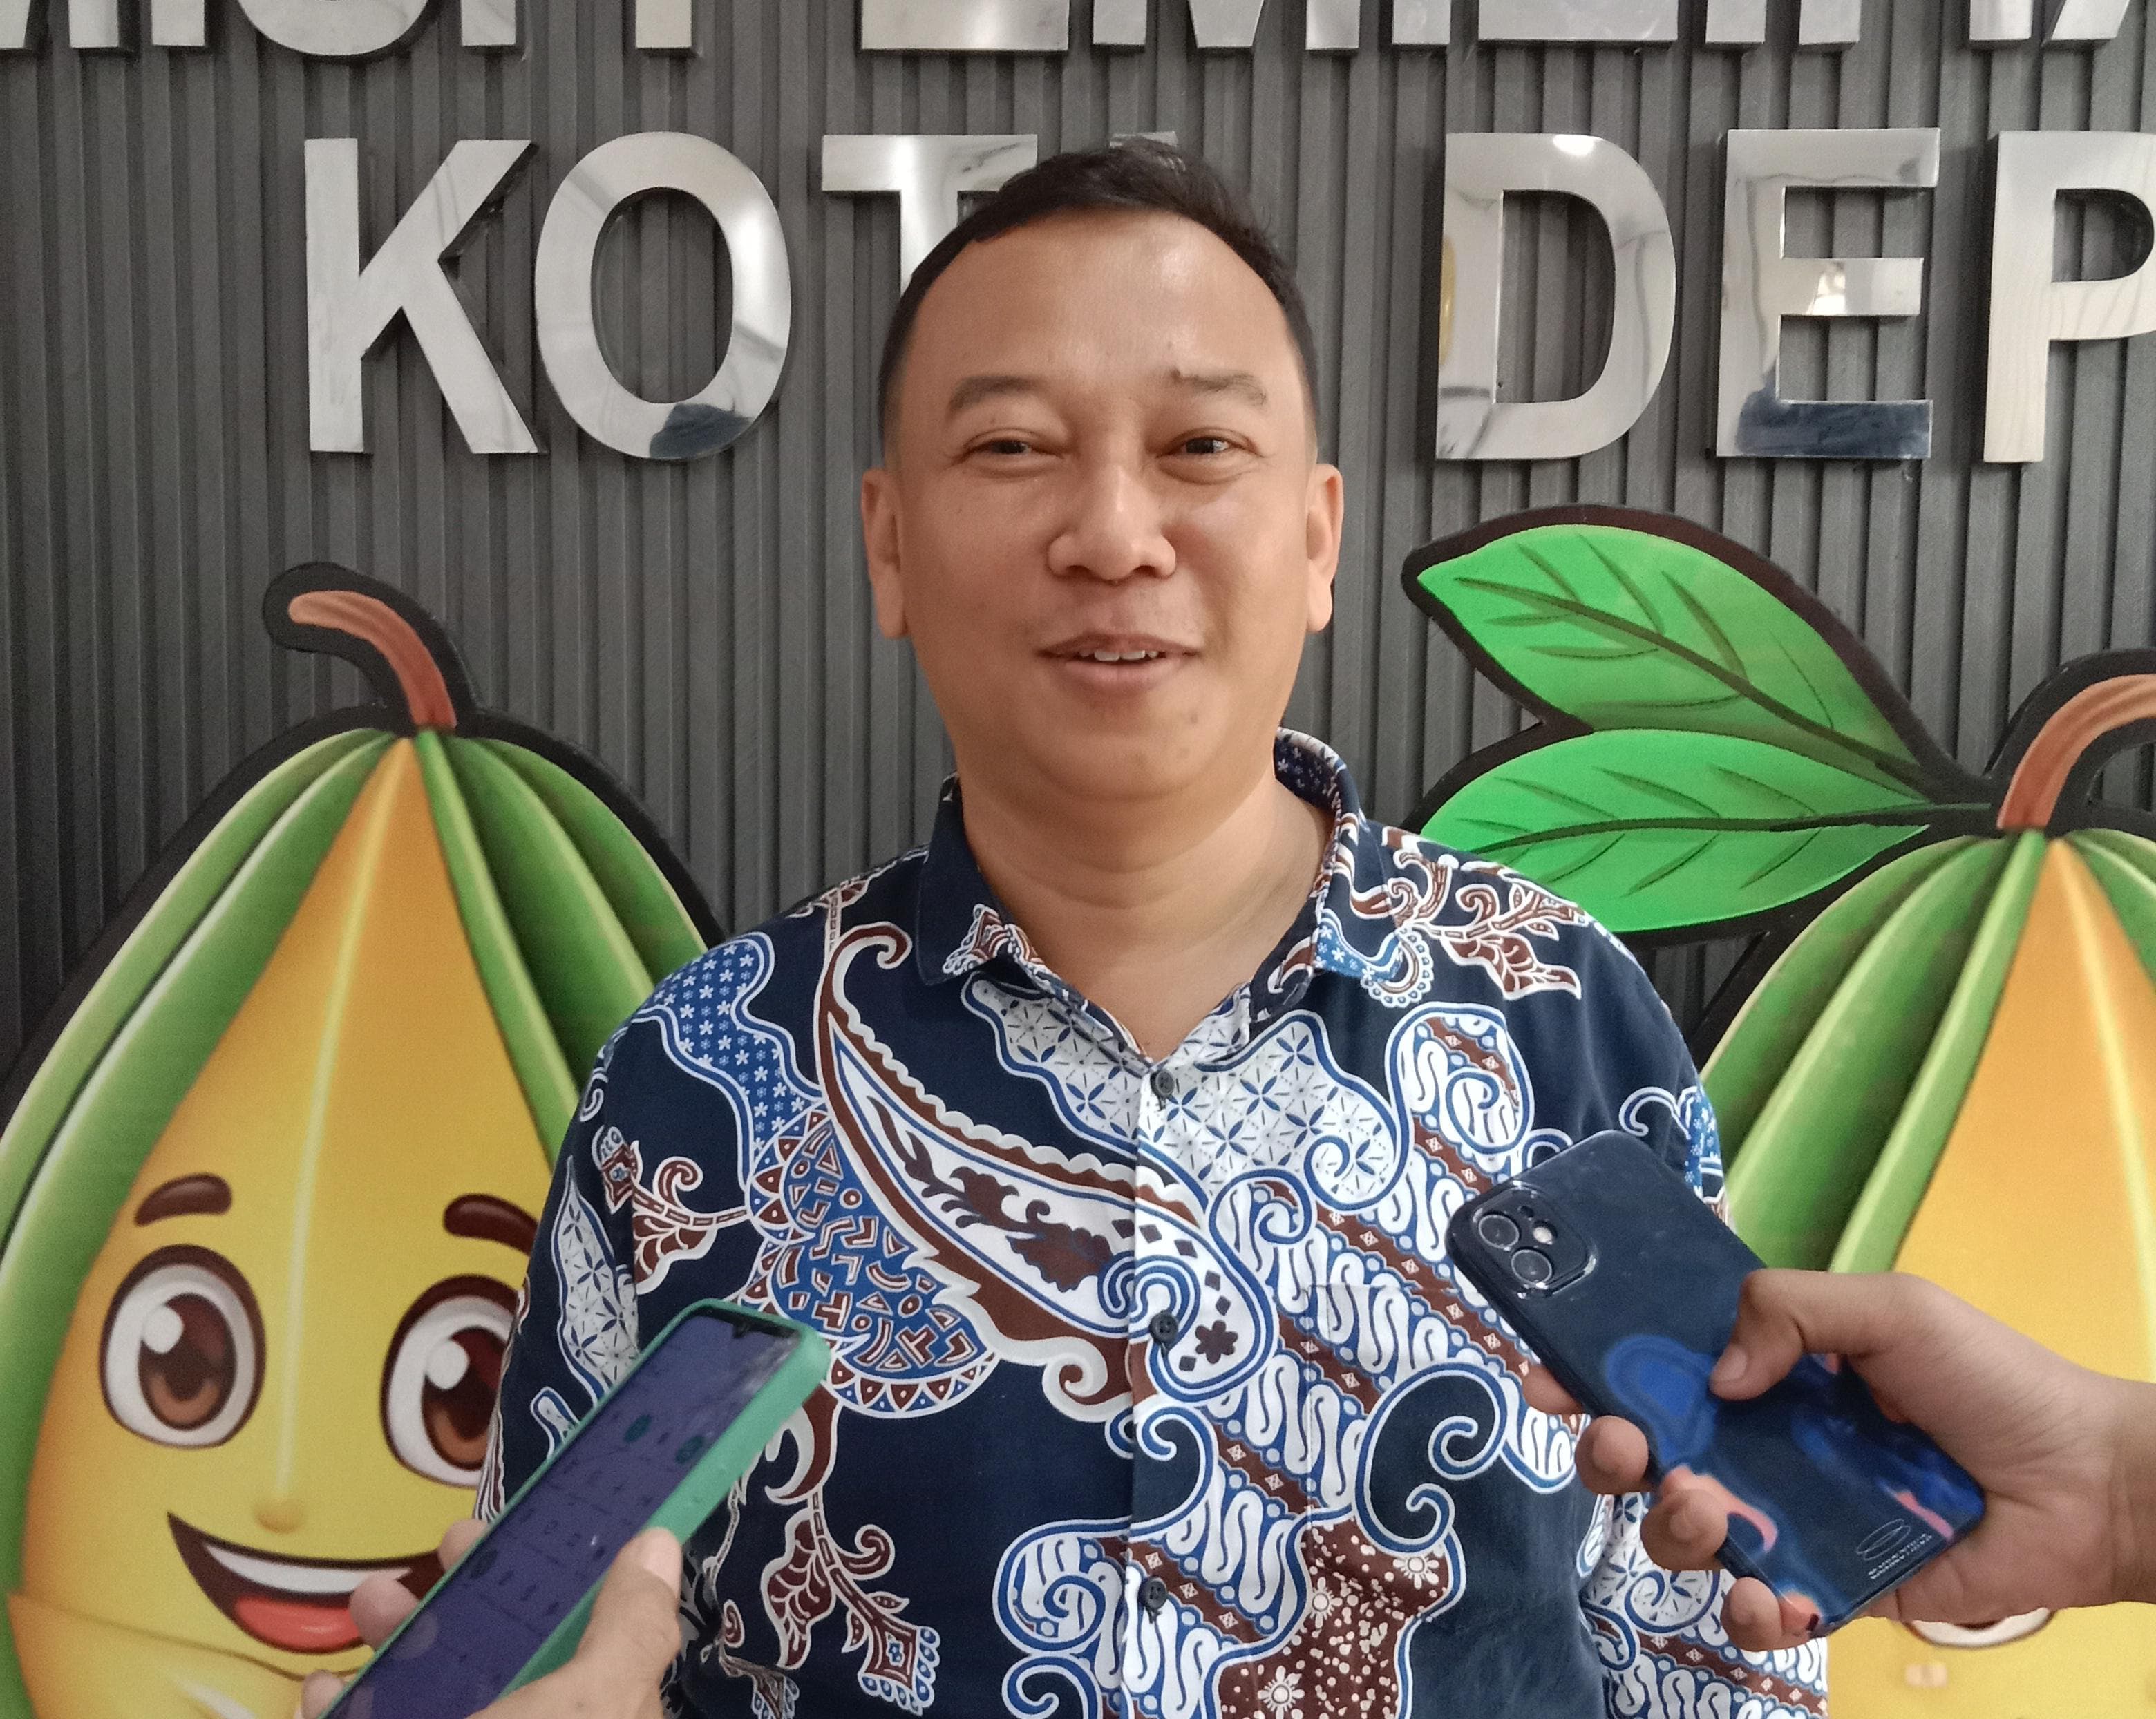 Jelang Pilkada, KPU Kota Depok Ajak Warga Meriahkan Jalan Sehat untuk Jaga Silaturahmi  